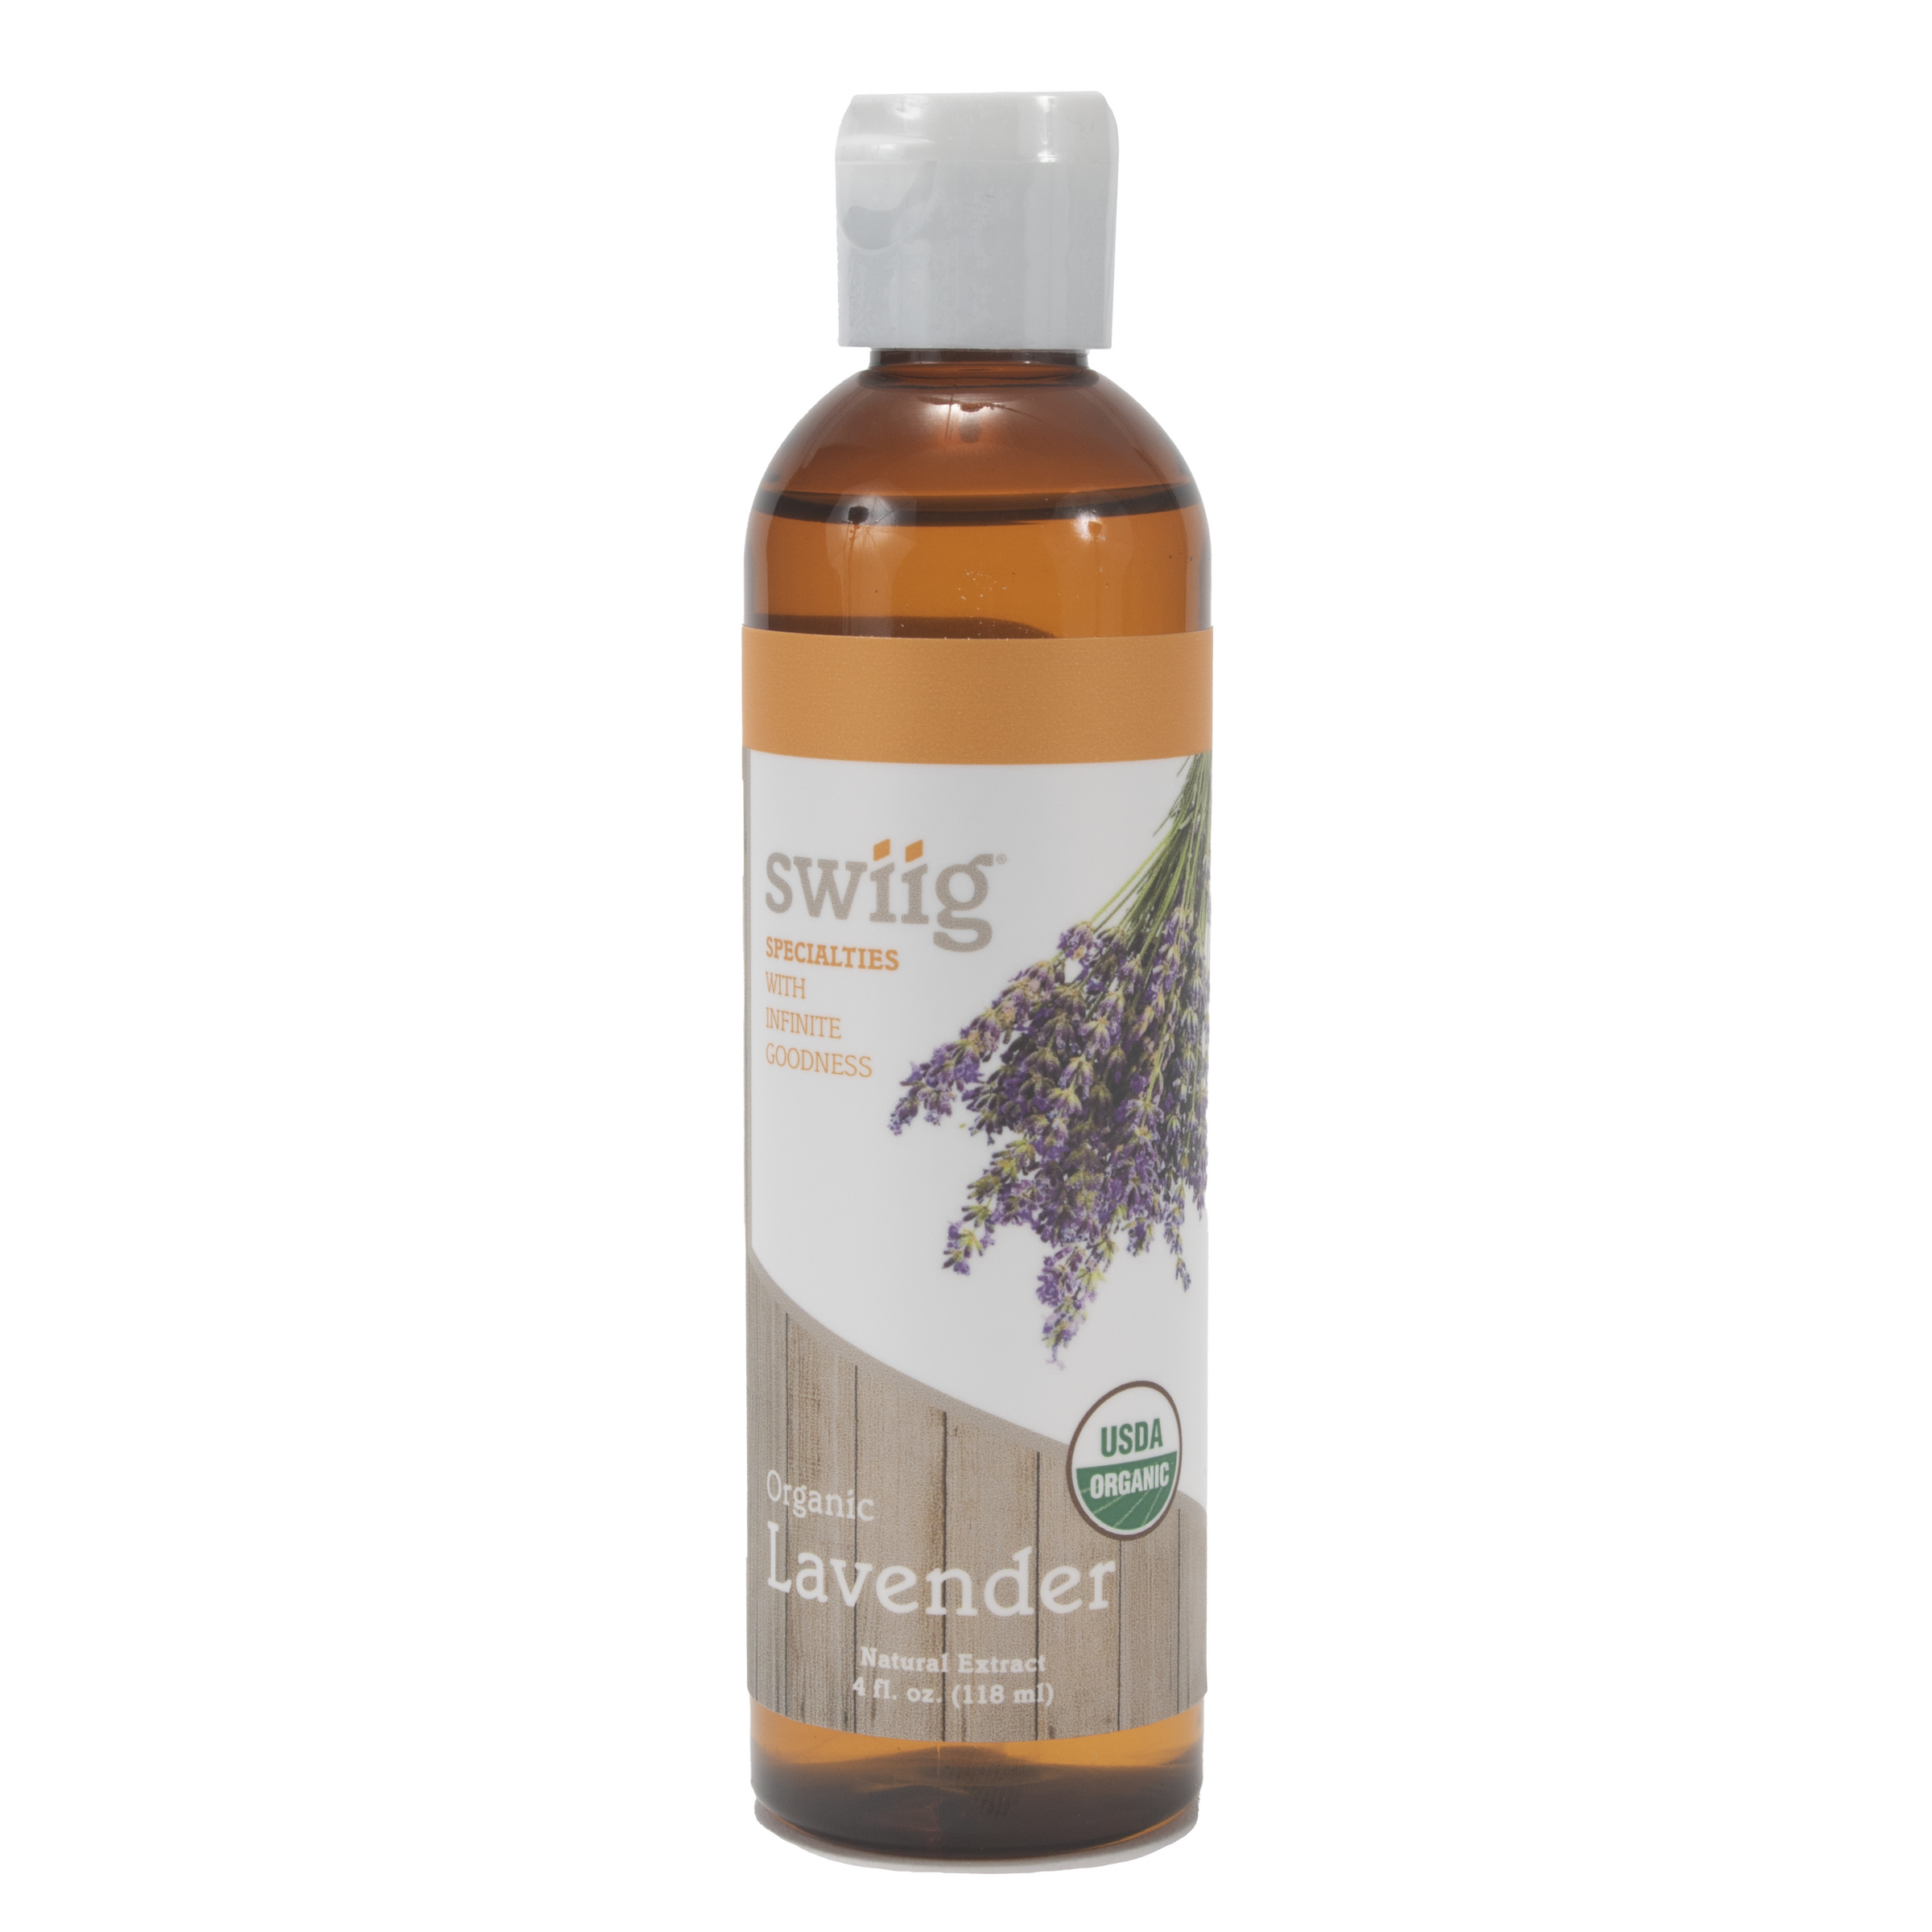 Organic Lavender Oil - variety SUPER